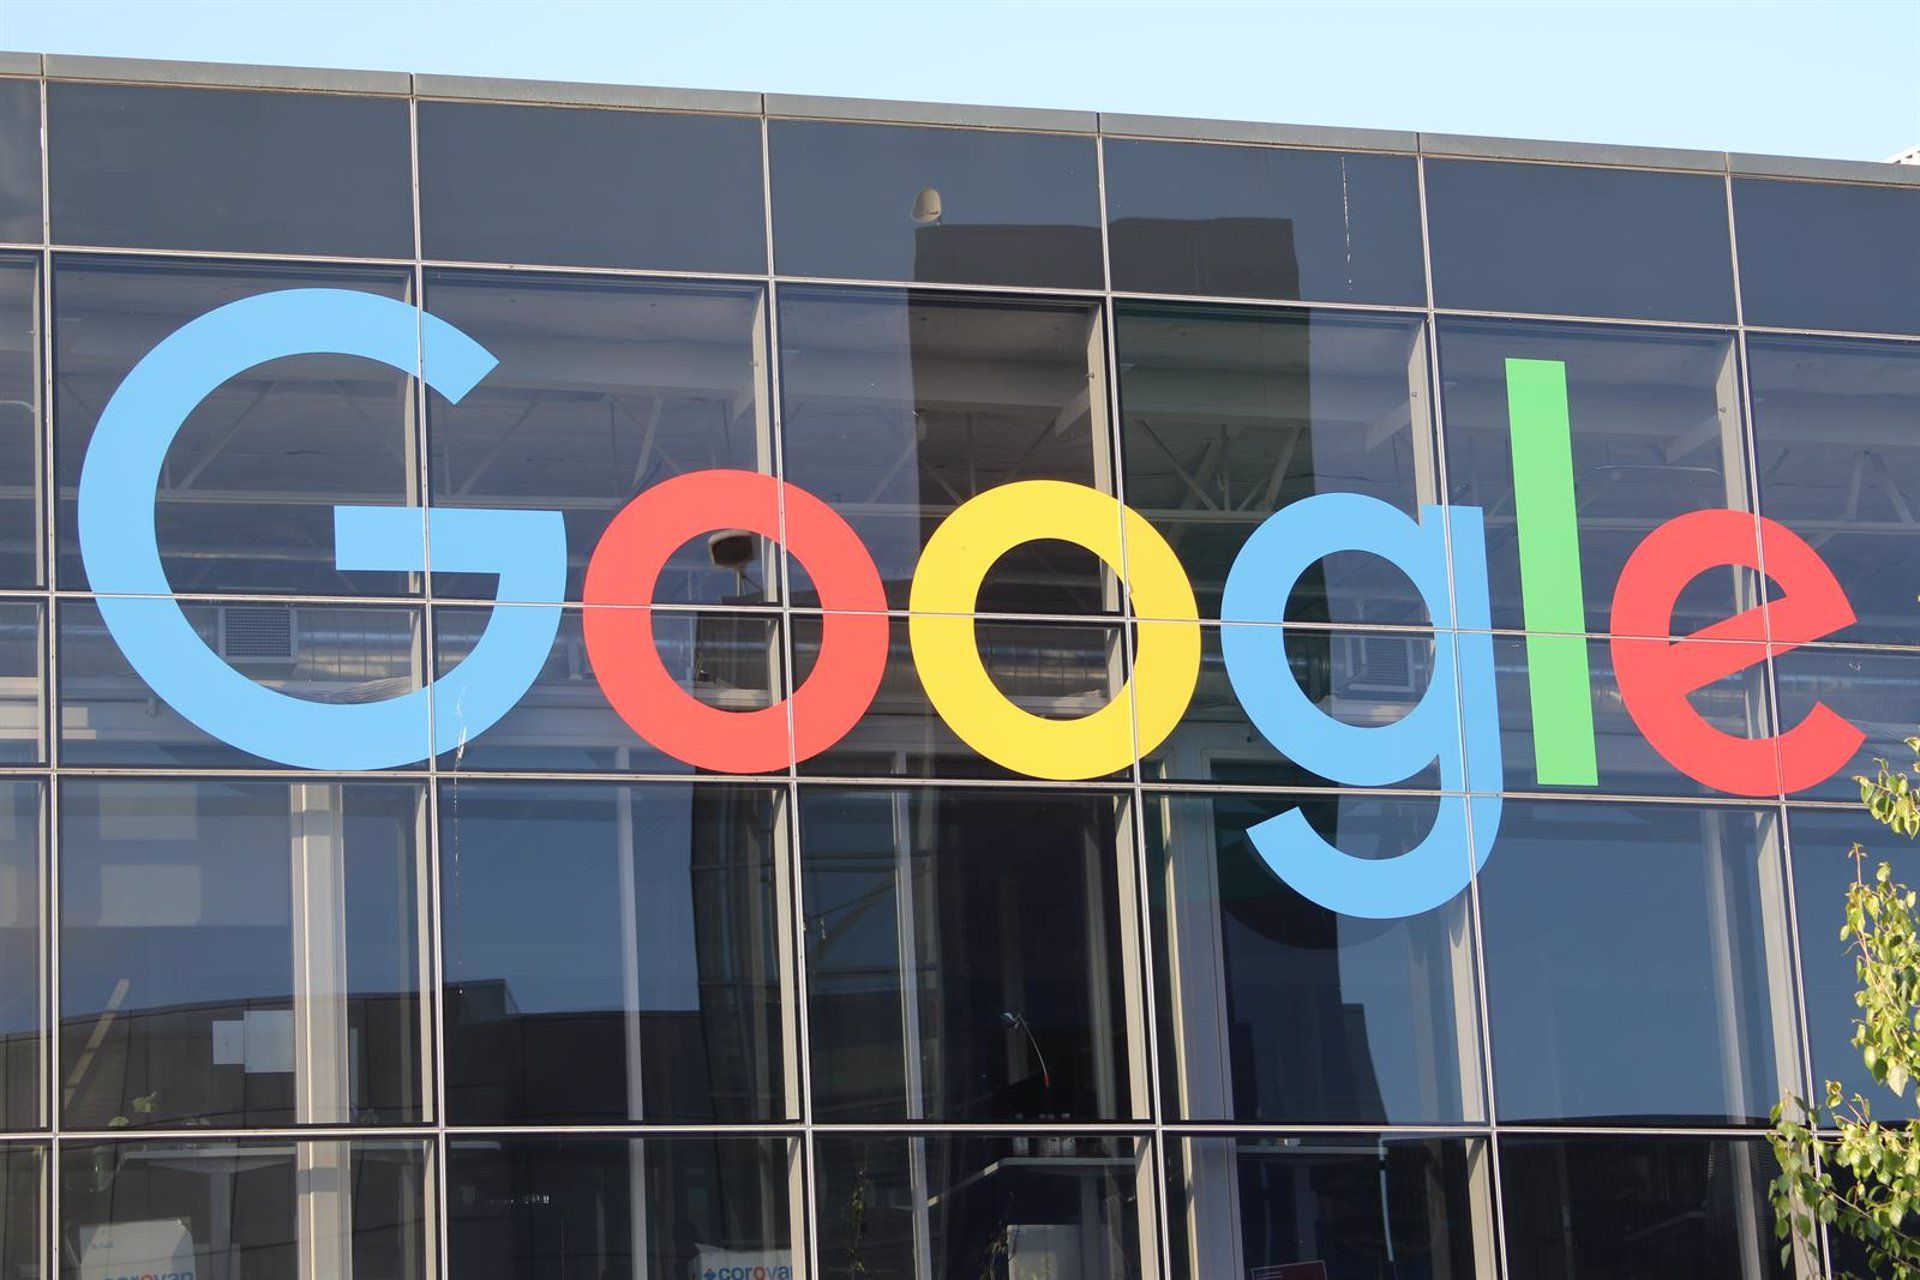 Francia impone multa de 250 millones de euros a Google